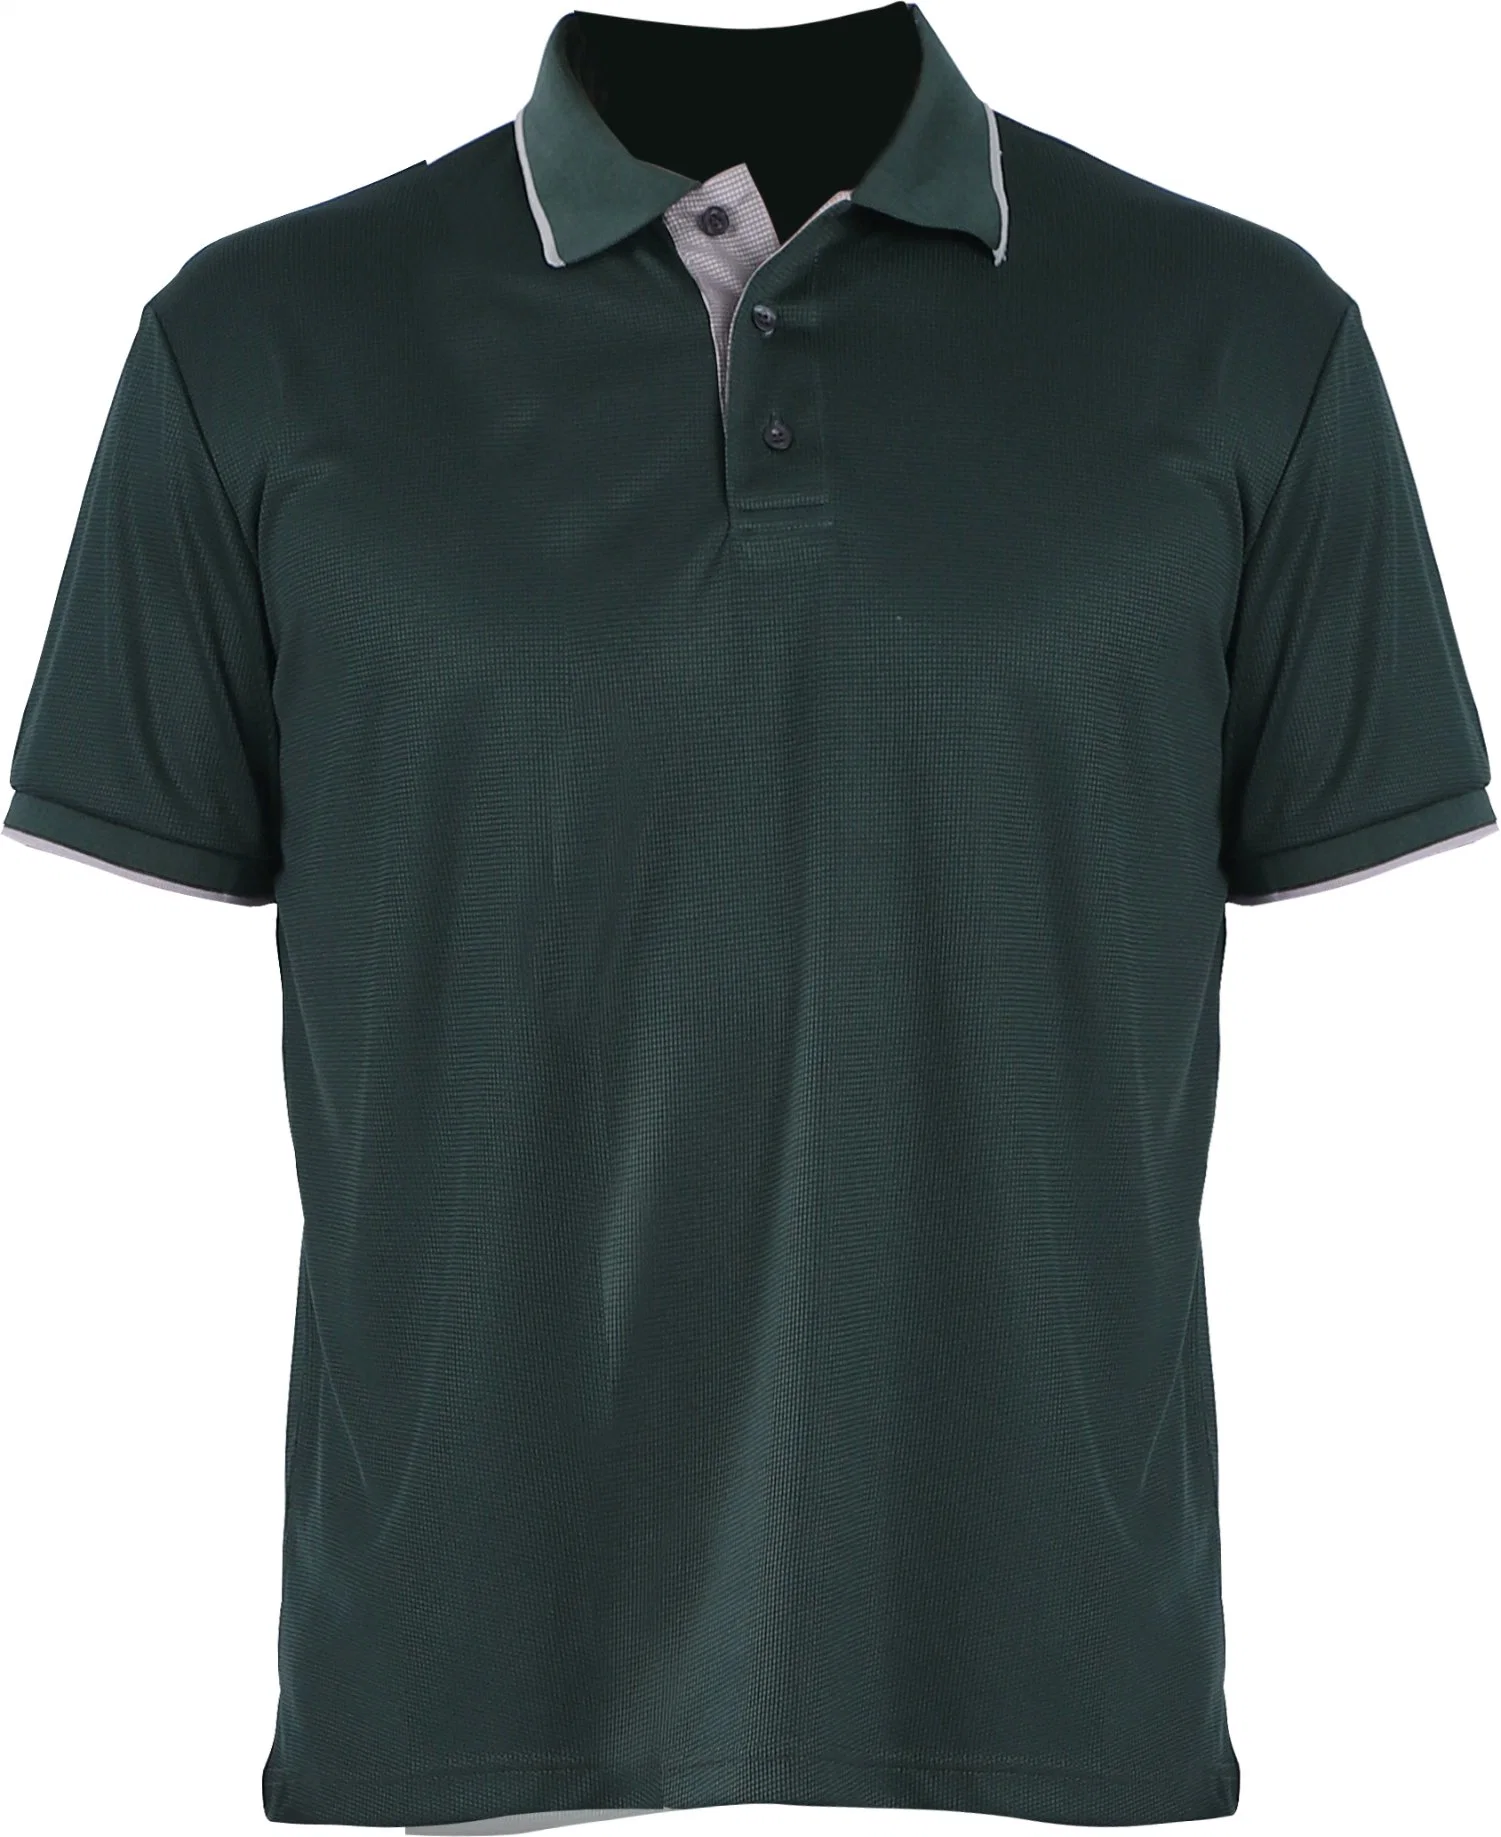 Men's Summer High Quality Colorful Polo Short Shirt Apparel